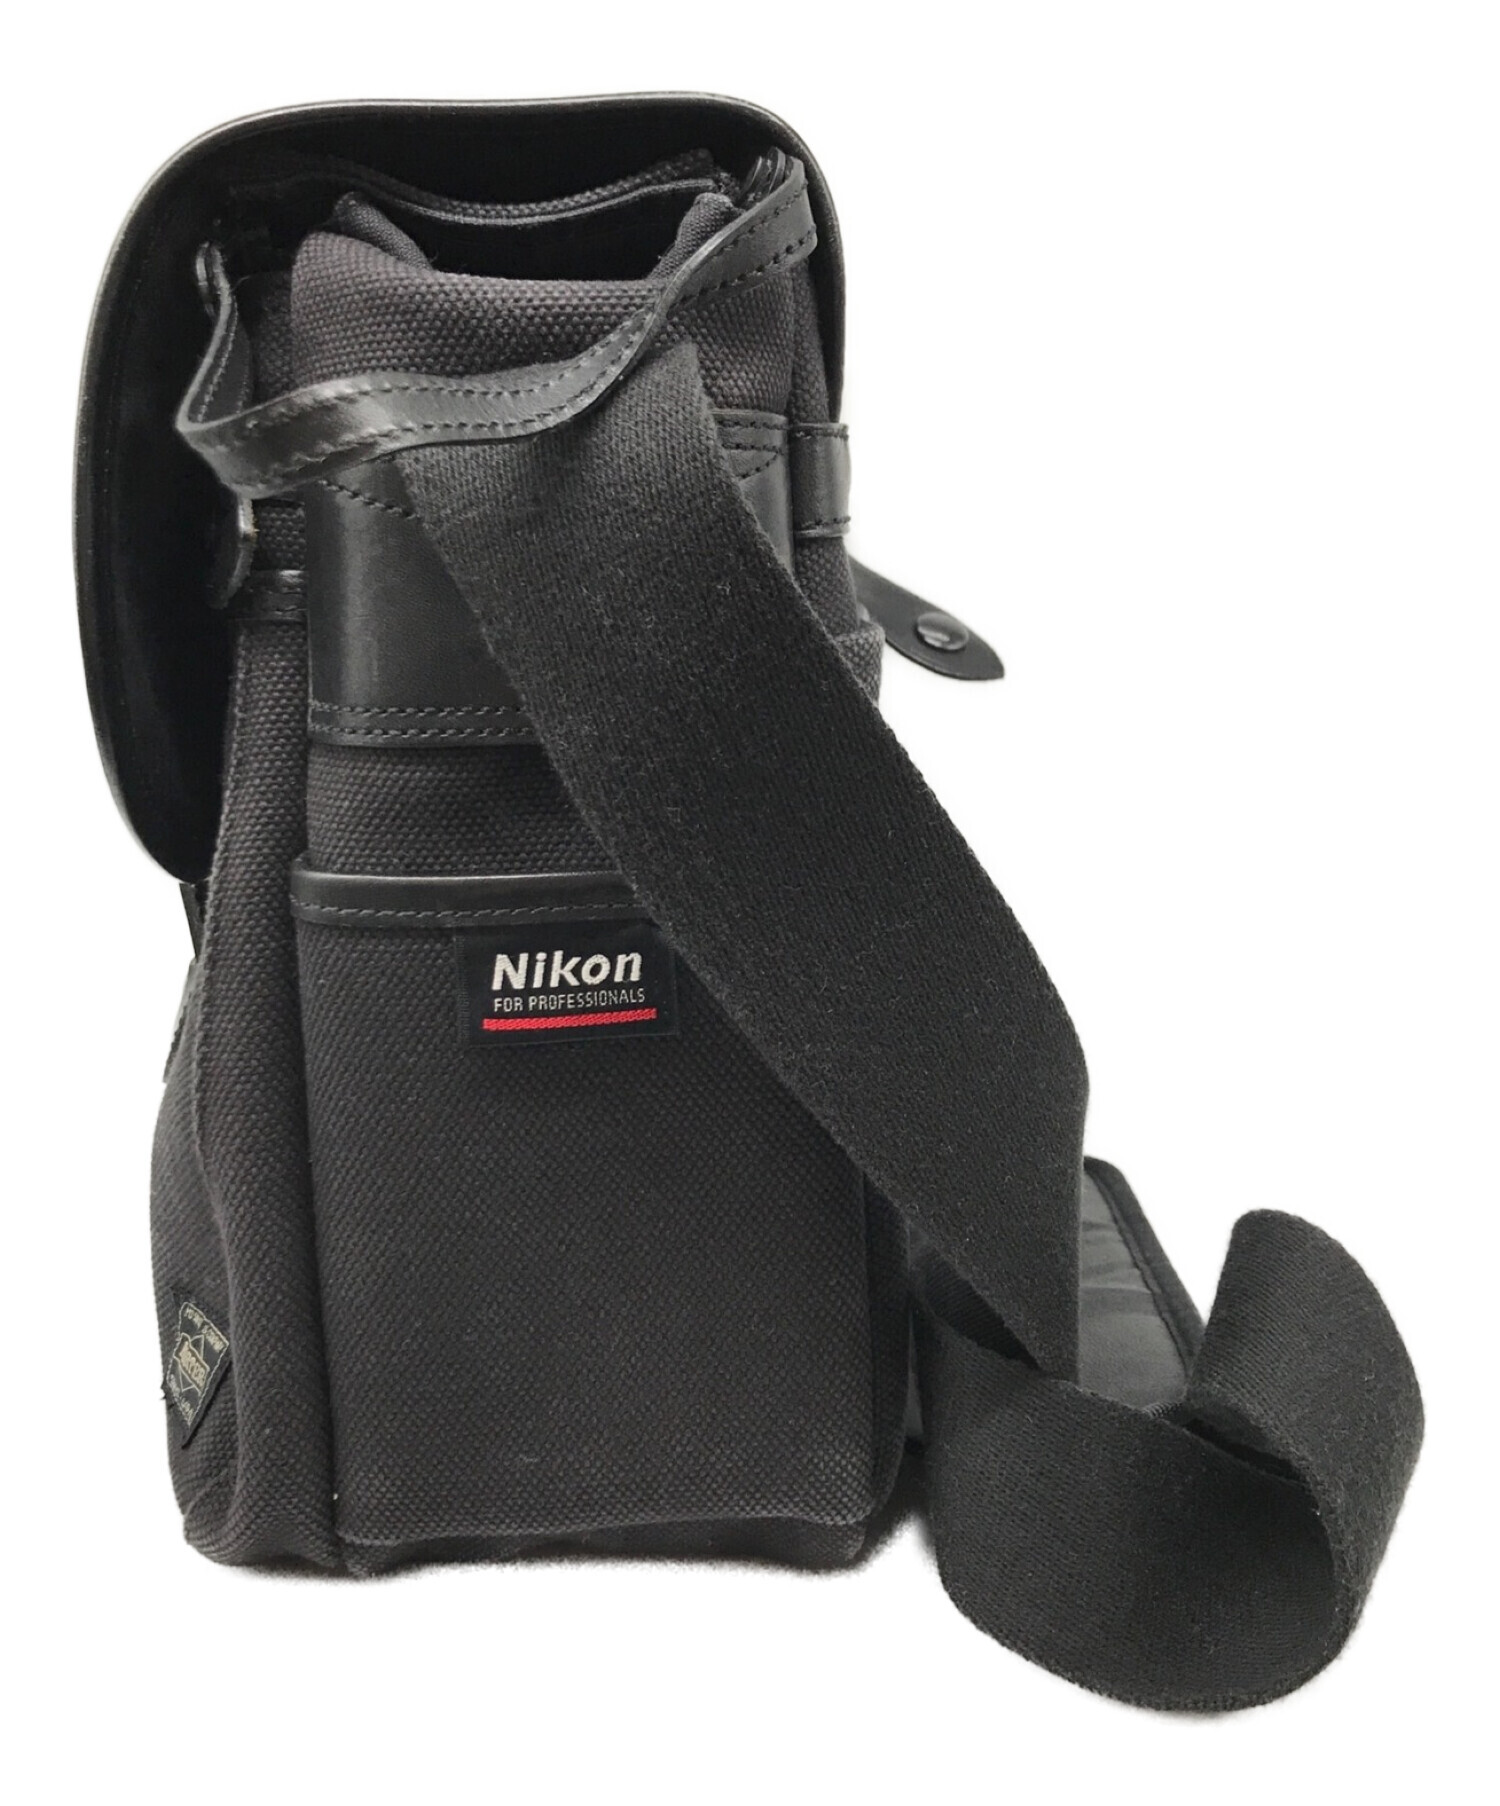 Nikon×PORTER (ニコン ポーター) カメラバッグ ブラック